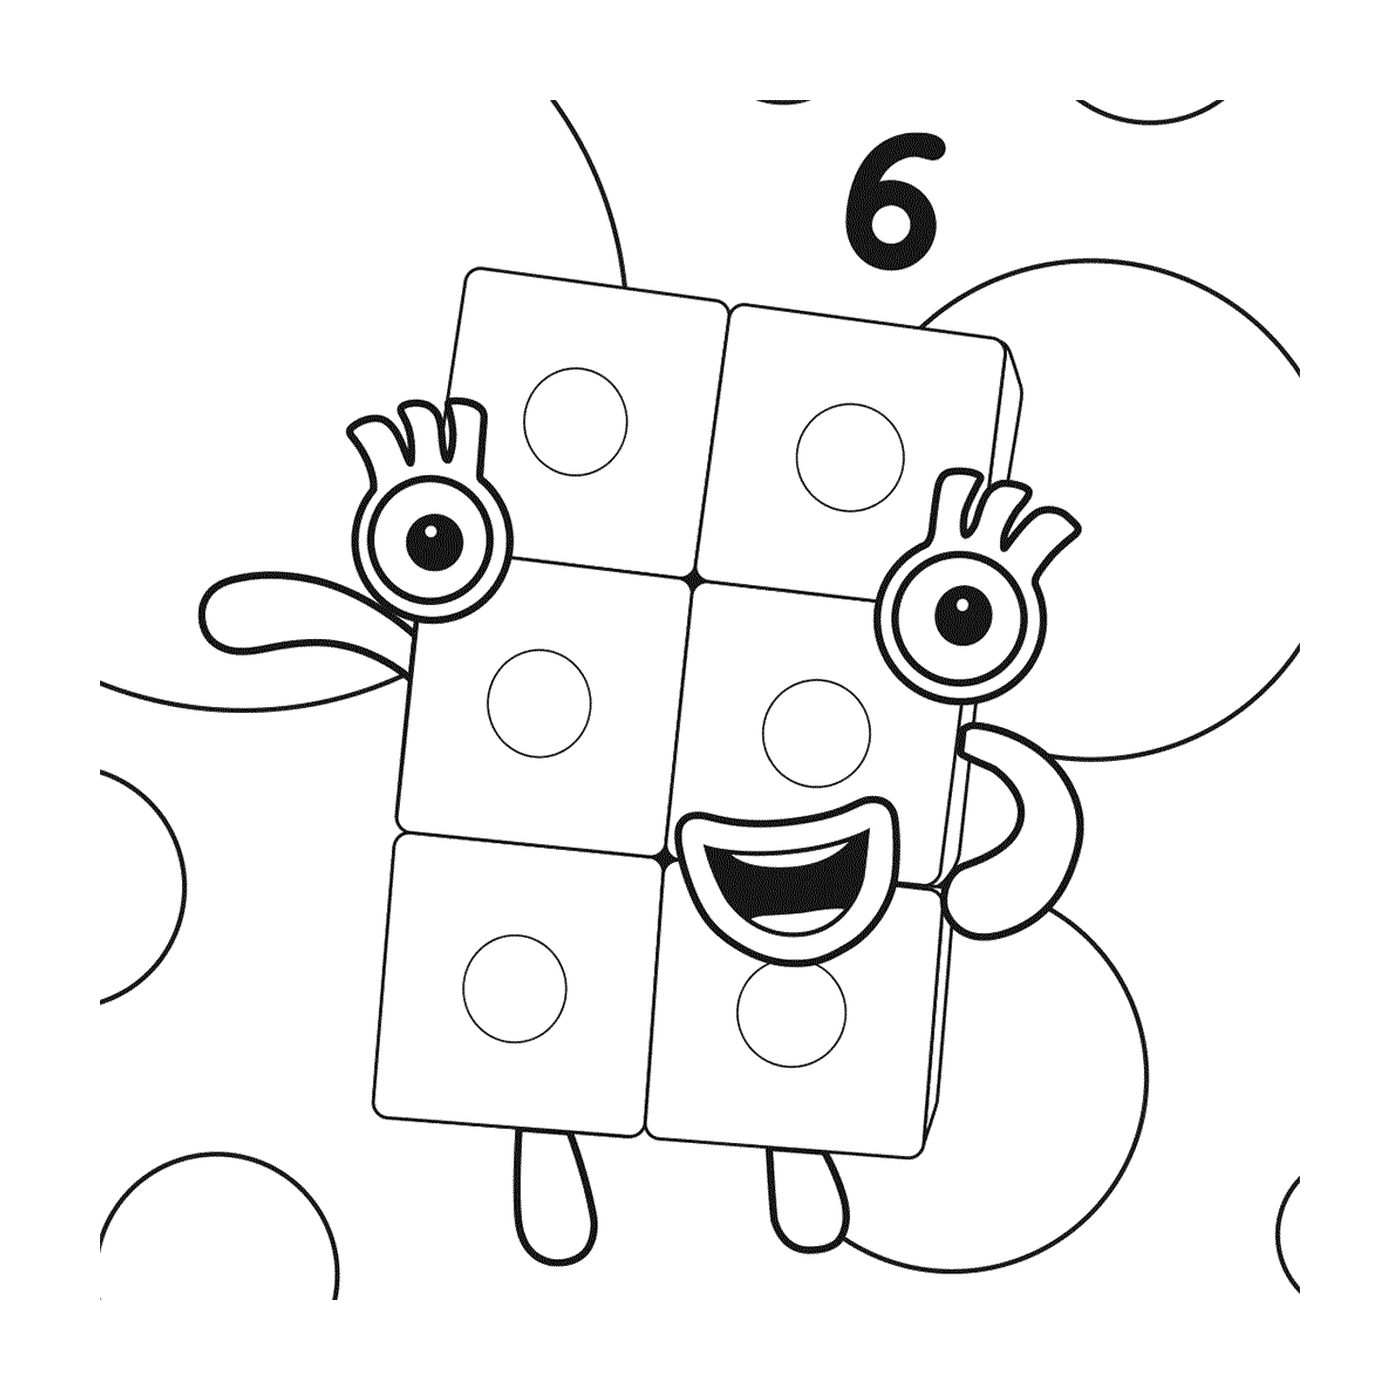  Numberblocks number 6, a happy number 